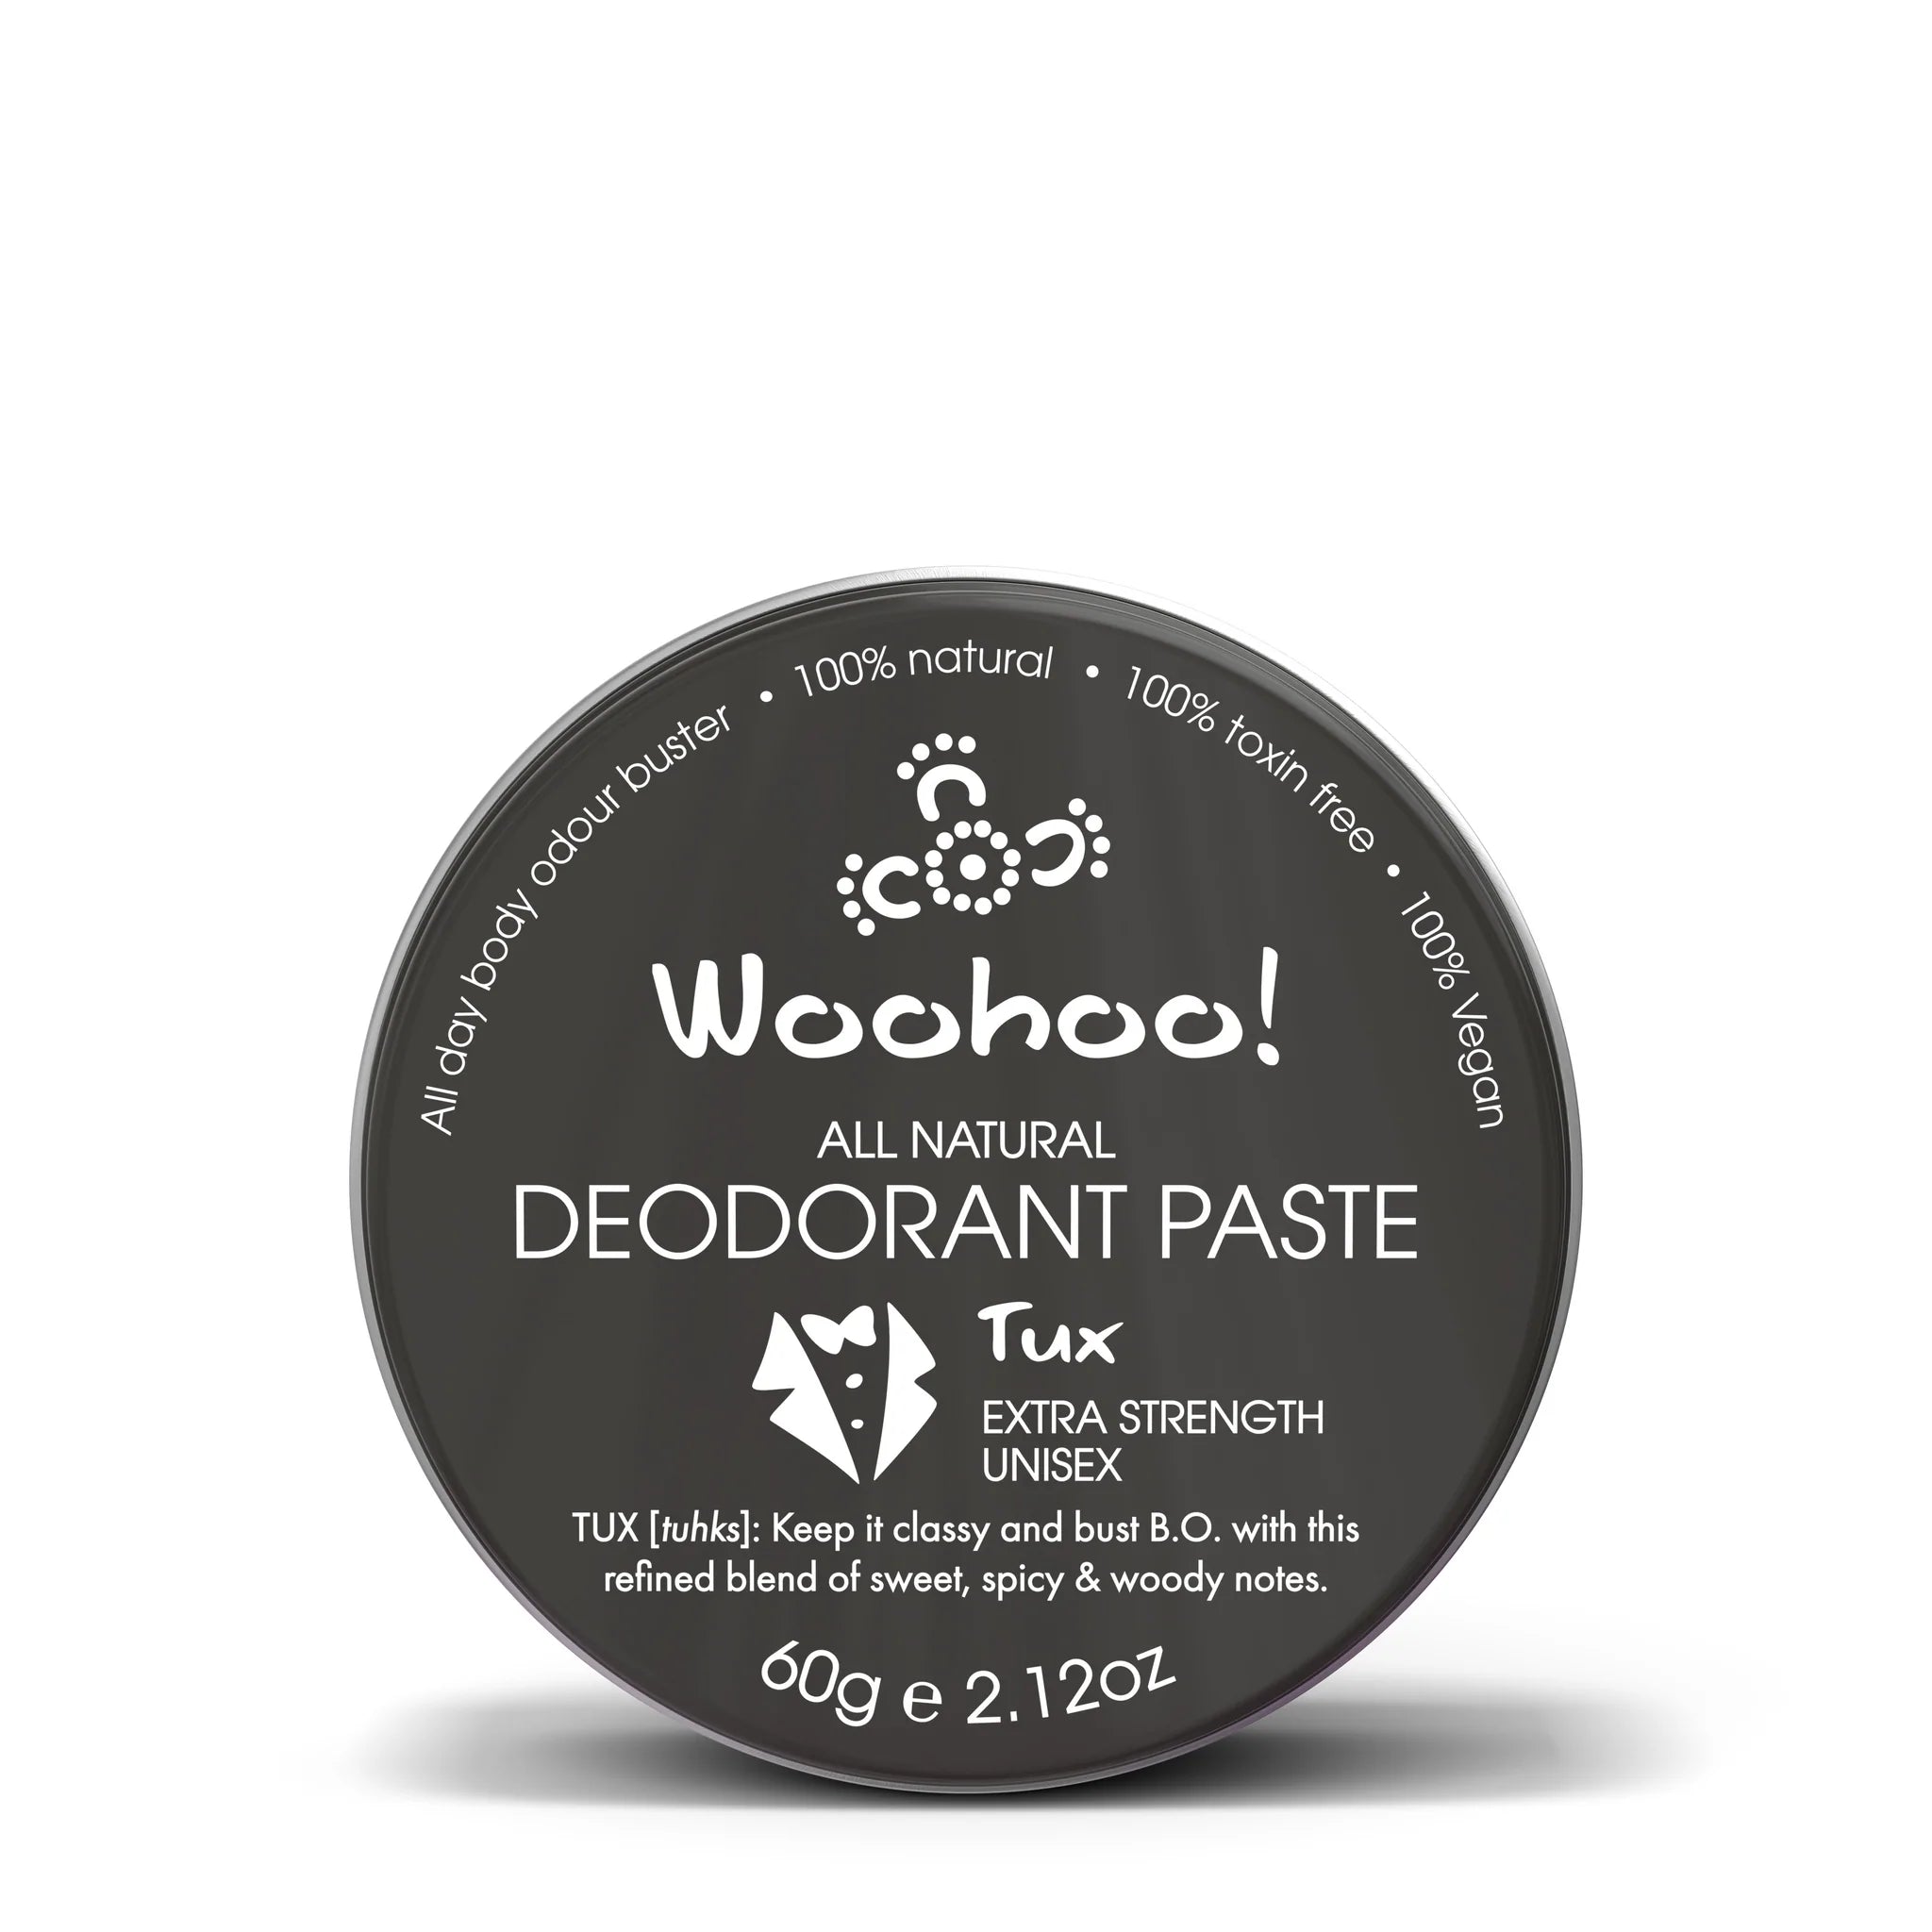 Woohoo Deodorant Paste Tux (Regular Strength)Tin 60g-The Living Co.